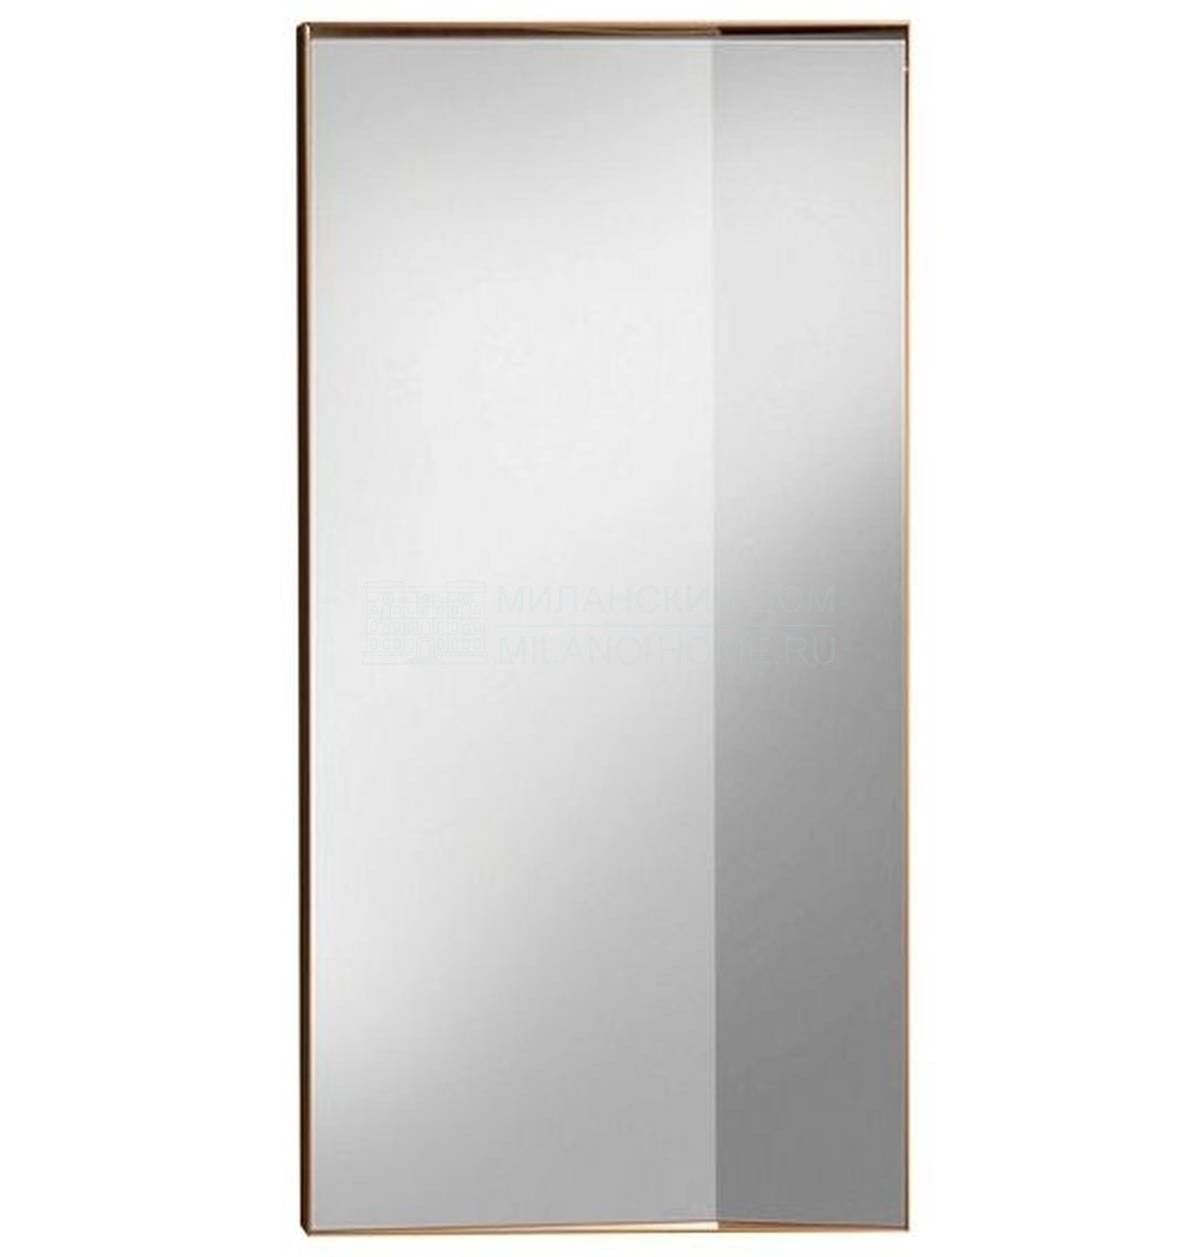 Зеркало напольное Angle simple mirror из Франции фабрики ROCHE BOBOIS